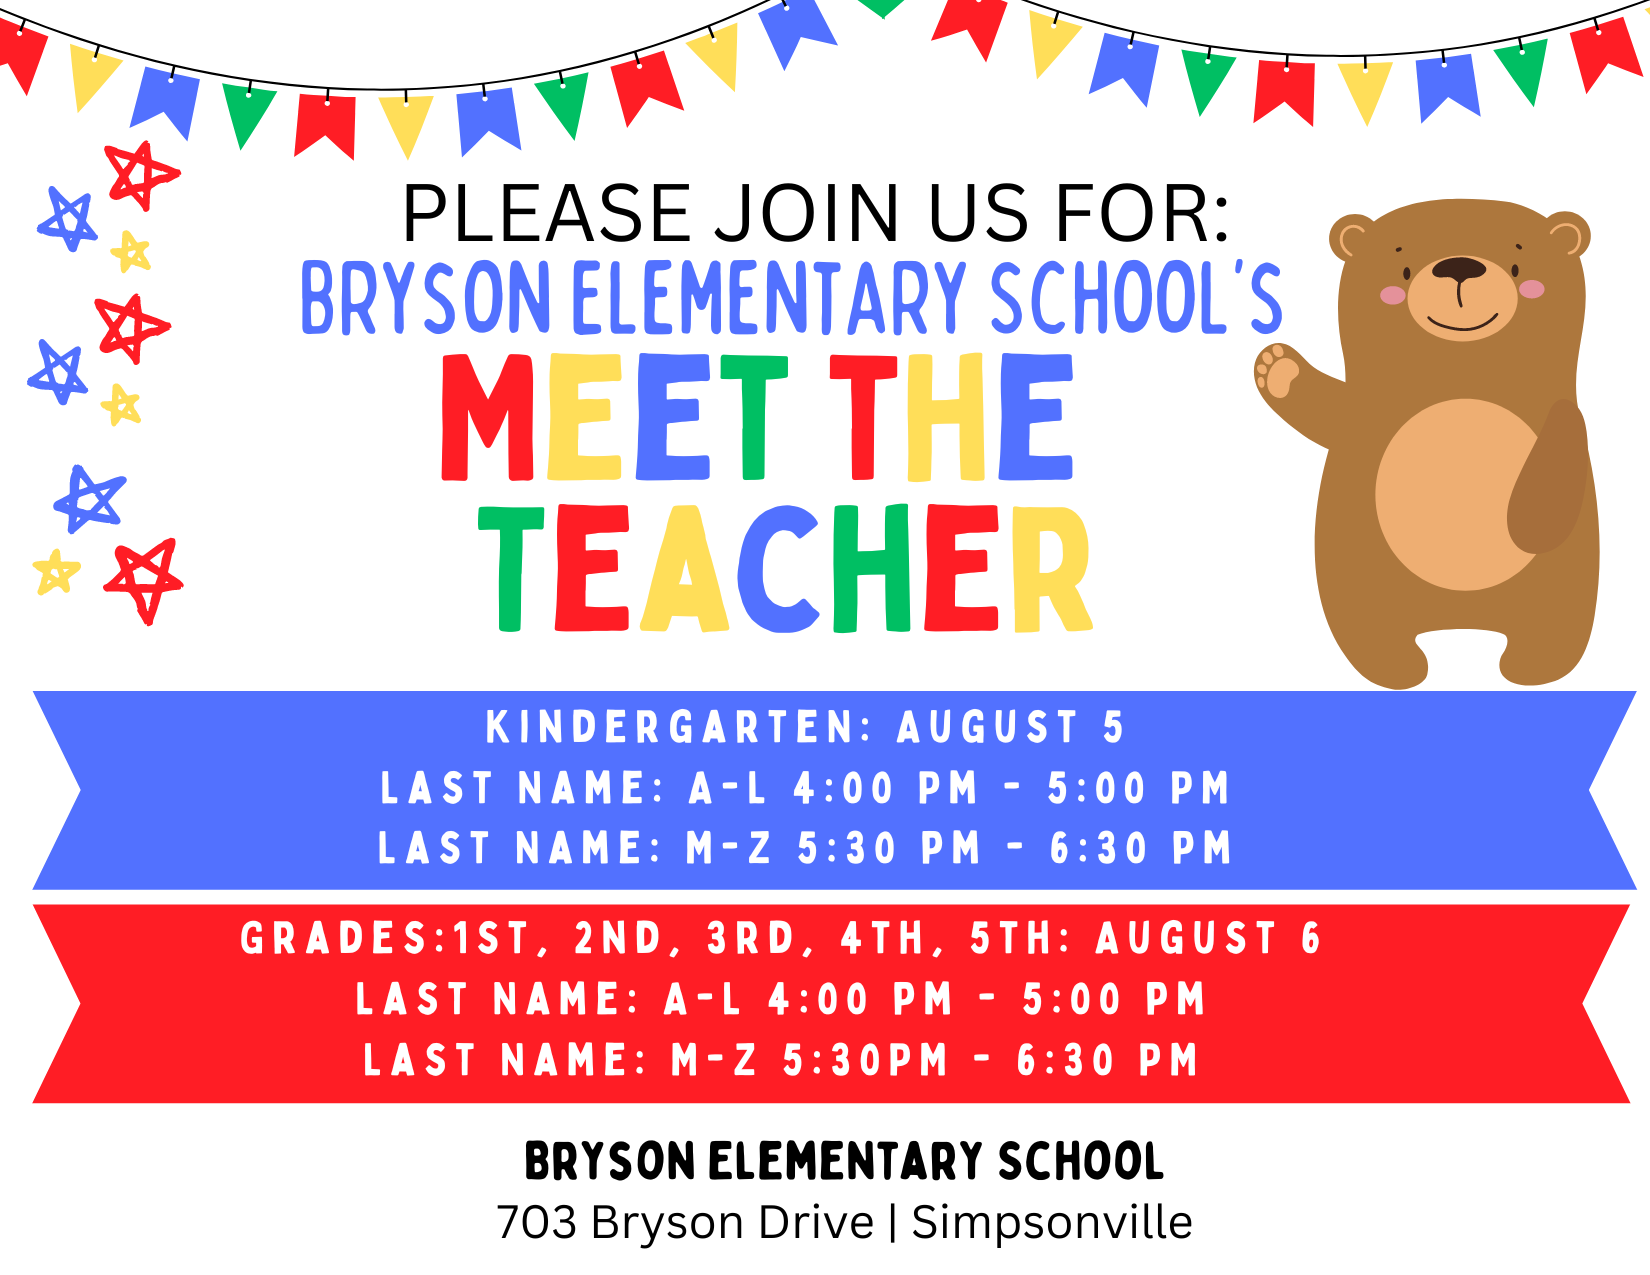 Please join us for Bryson Elementary School's Meet the Teacher Kindergarten August 5 Grades 1st-5th August 6